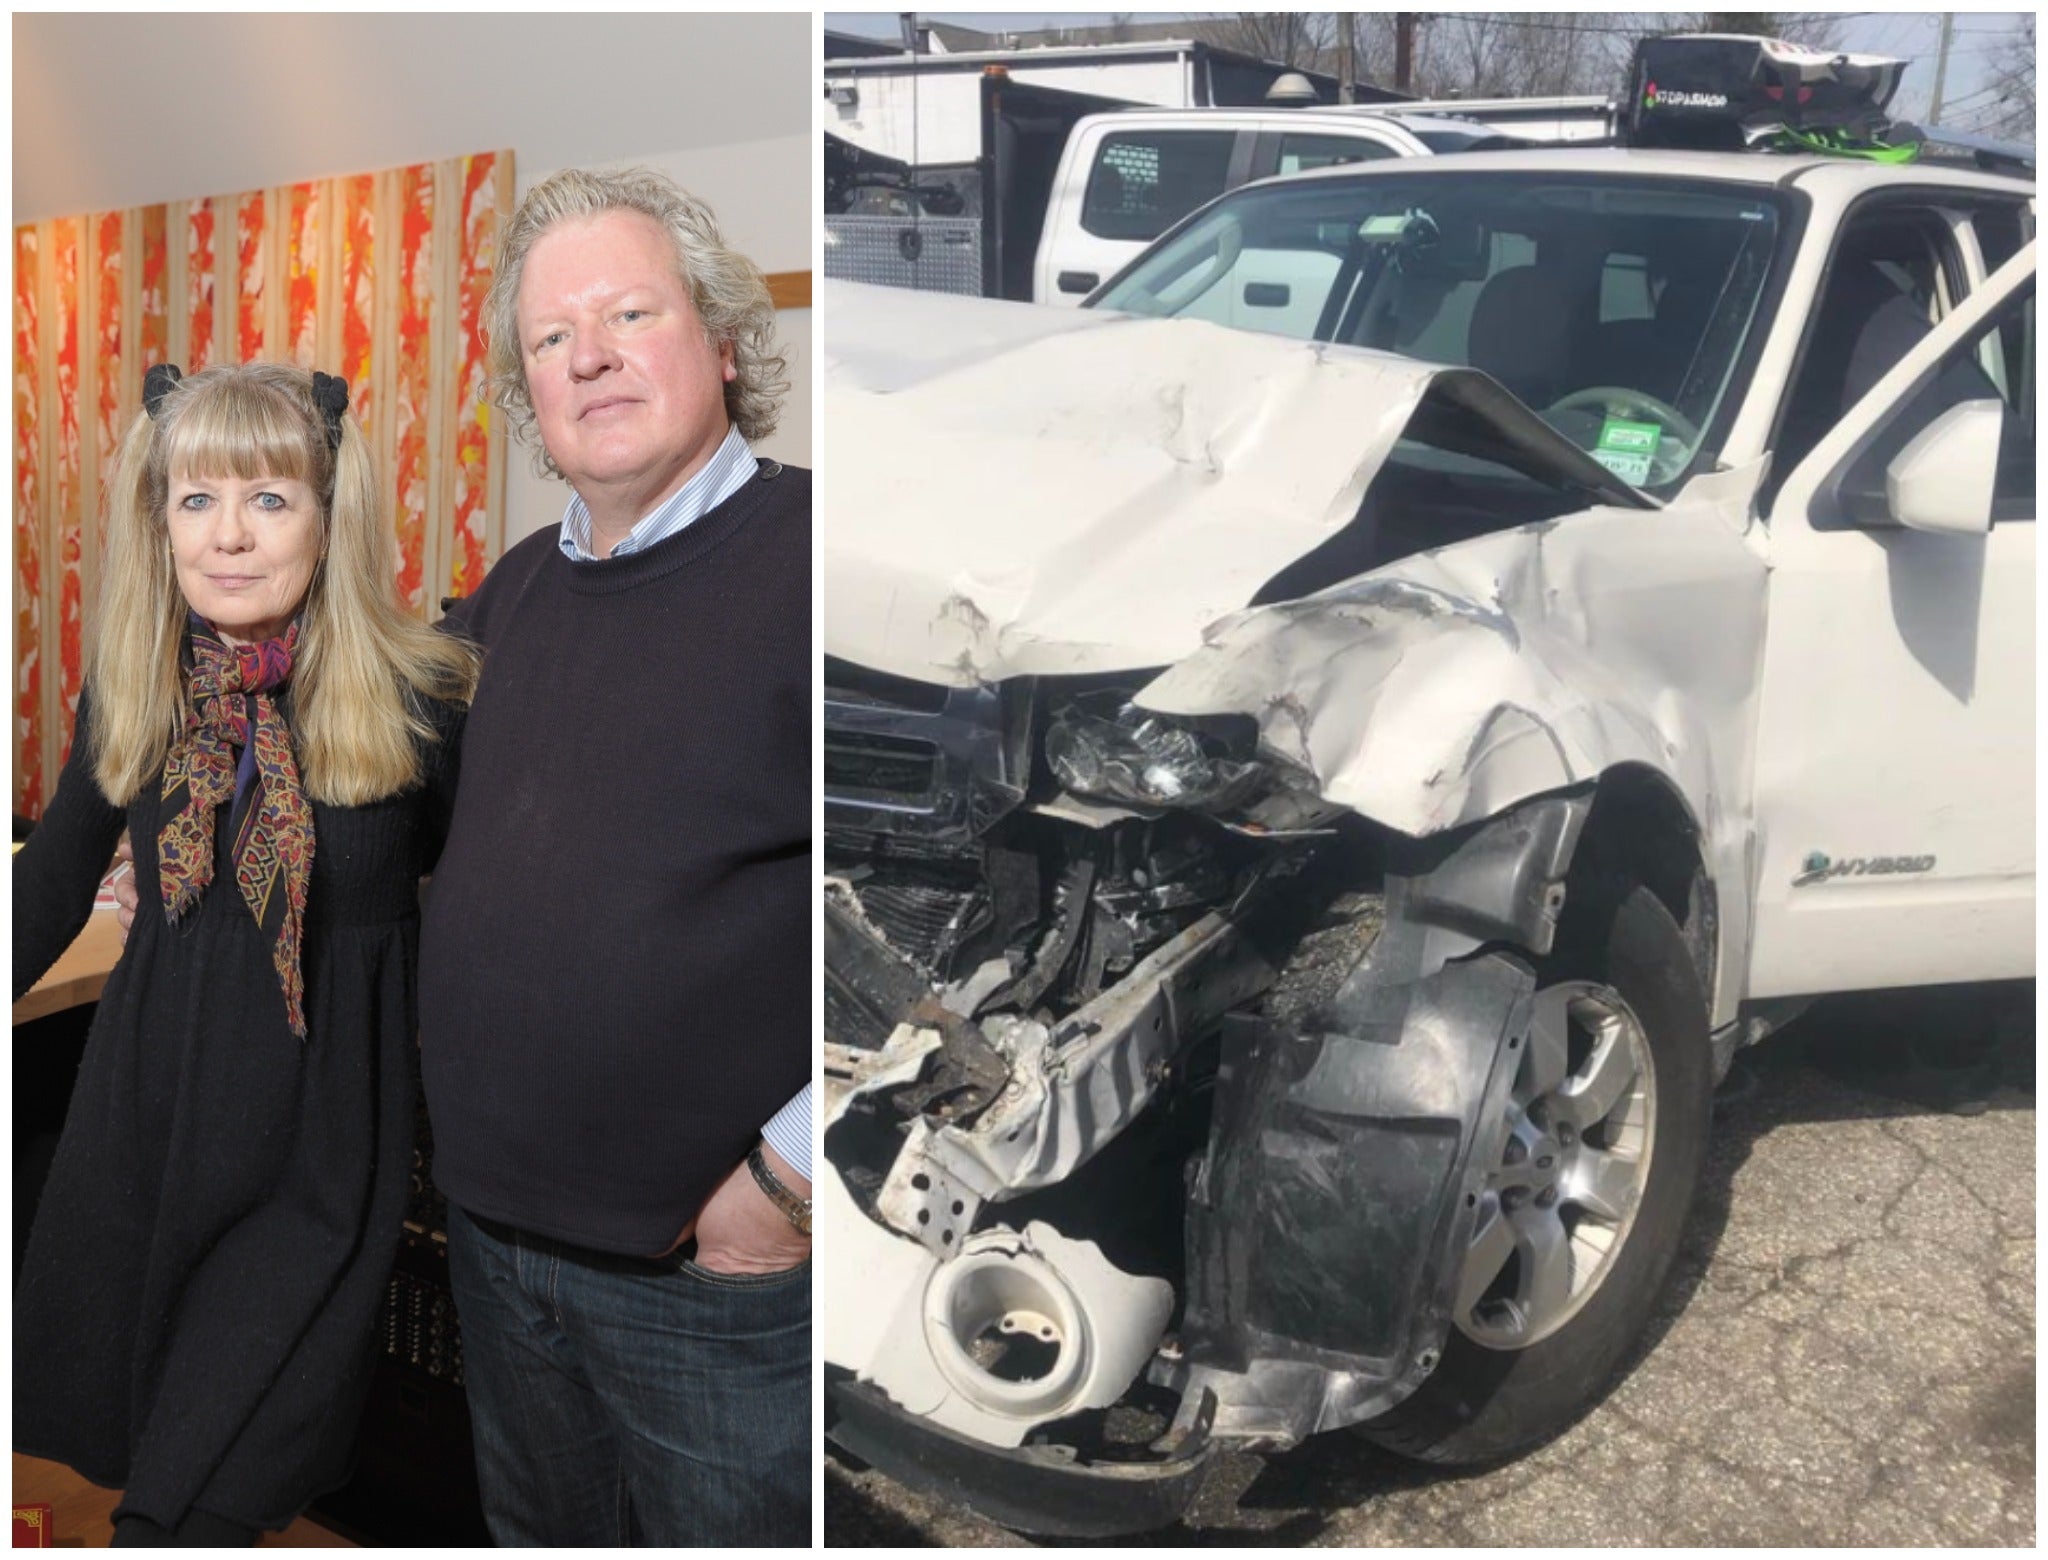 Tina Weymouth and Chris Frantz thanked their ‘guardian angels’ after surviving a serious car crash